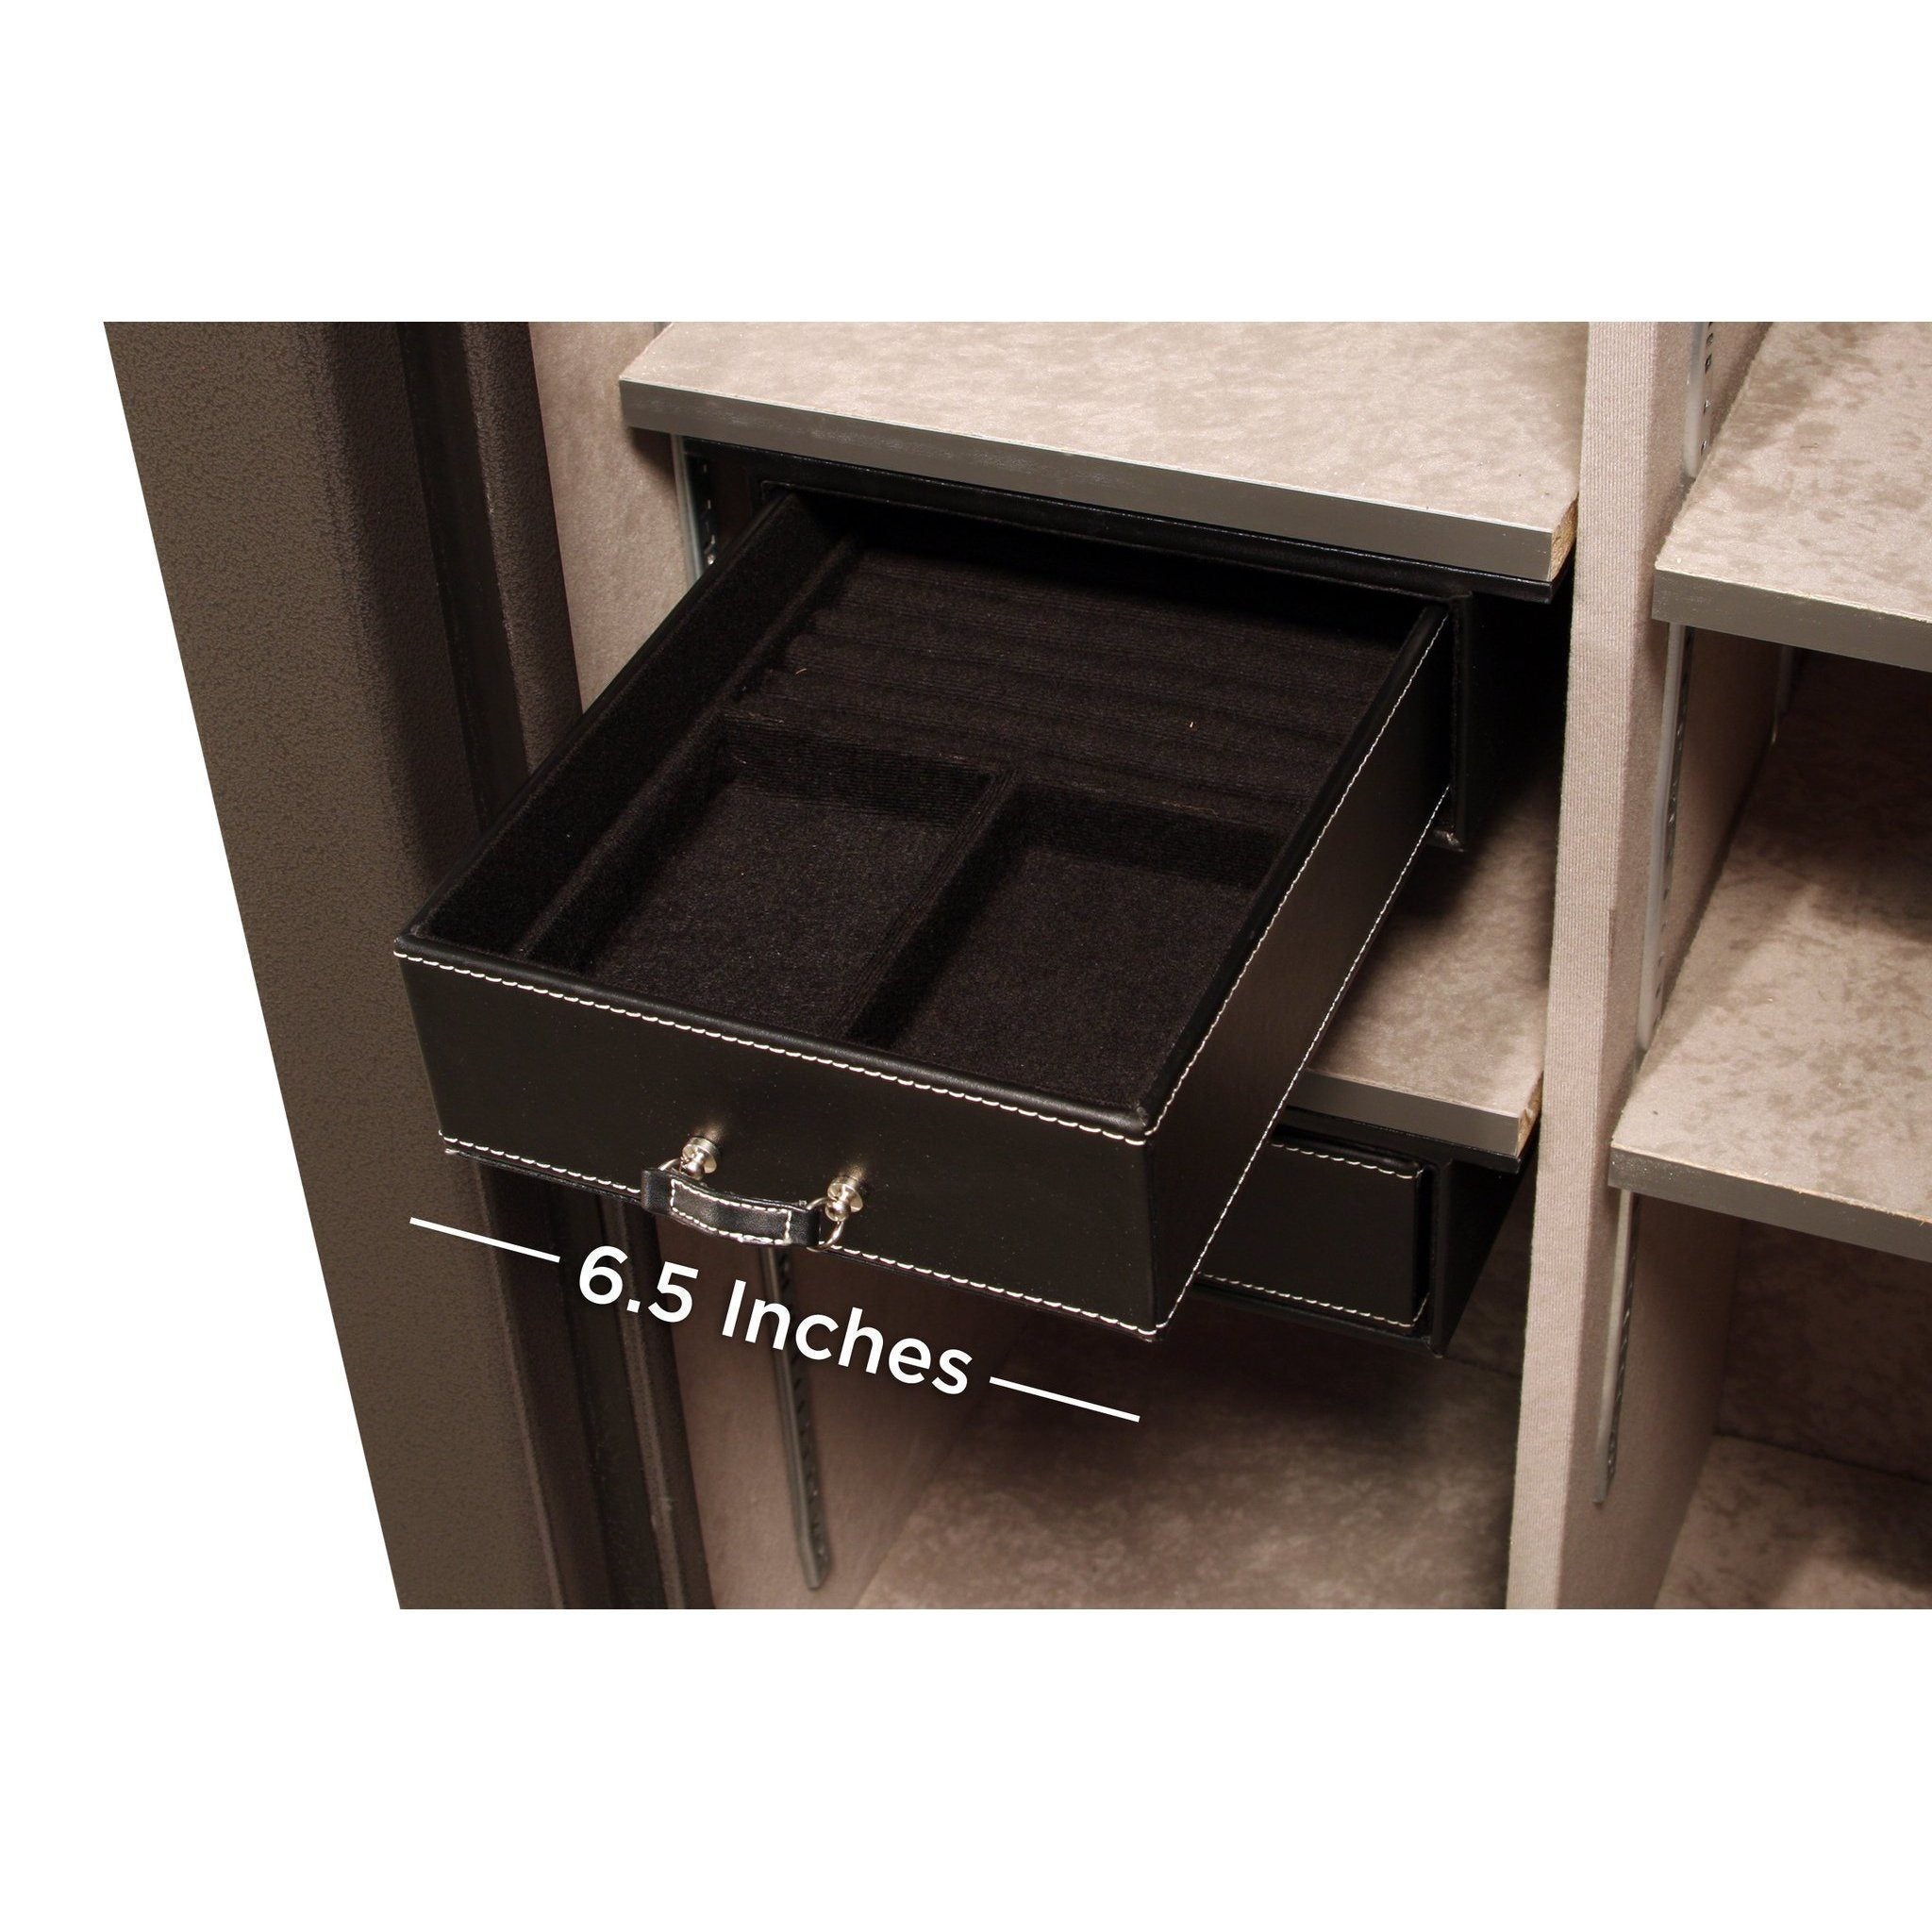 Accessory - Storage - Jewelry Drawer - 6.5 inch - under shelf mount - 20 size safes, photo 2